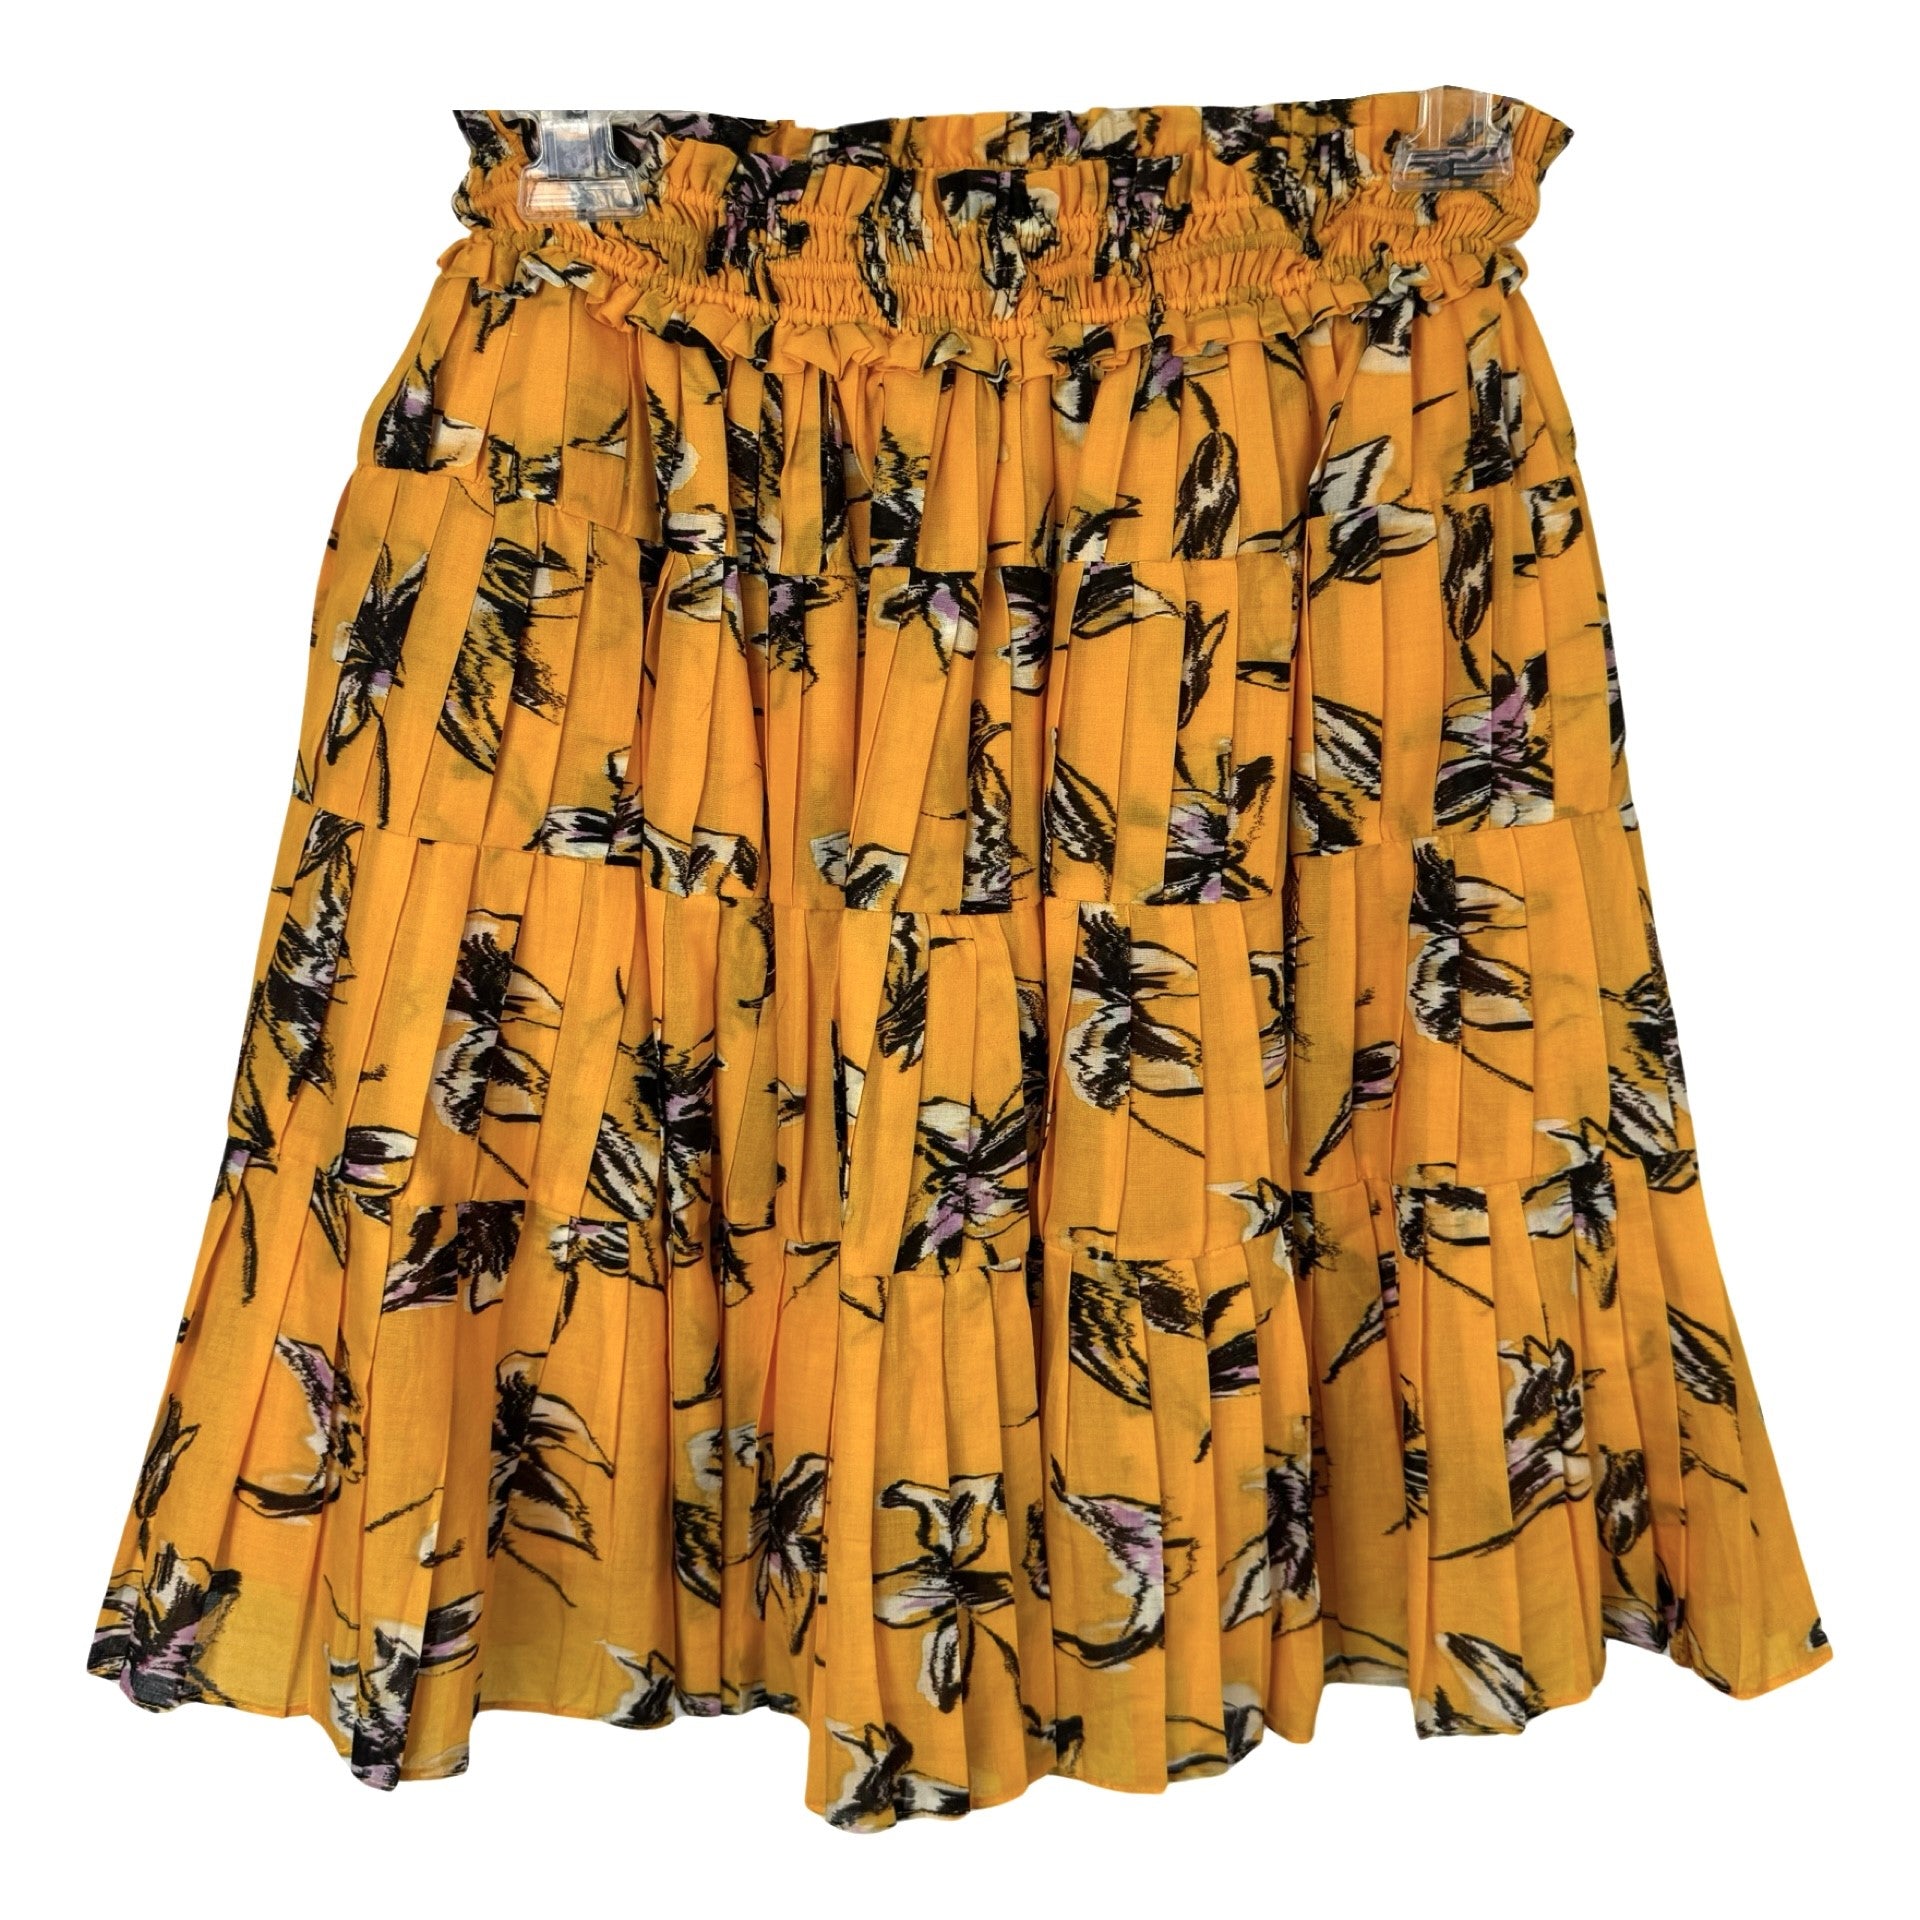 Tanya Taylor Pleated Floral Print Elasticized Waist Skirt